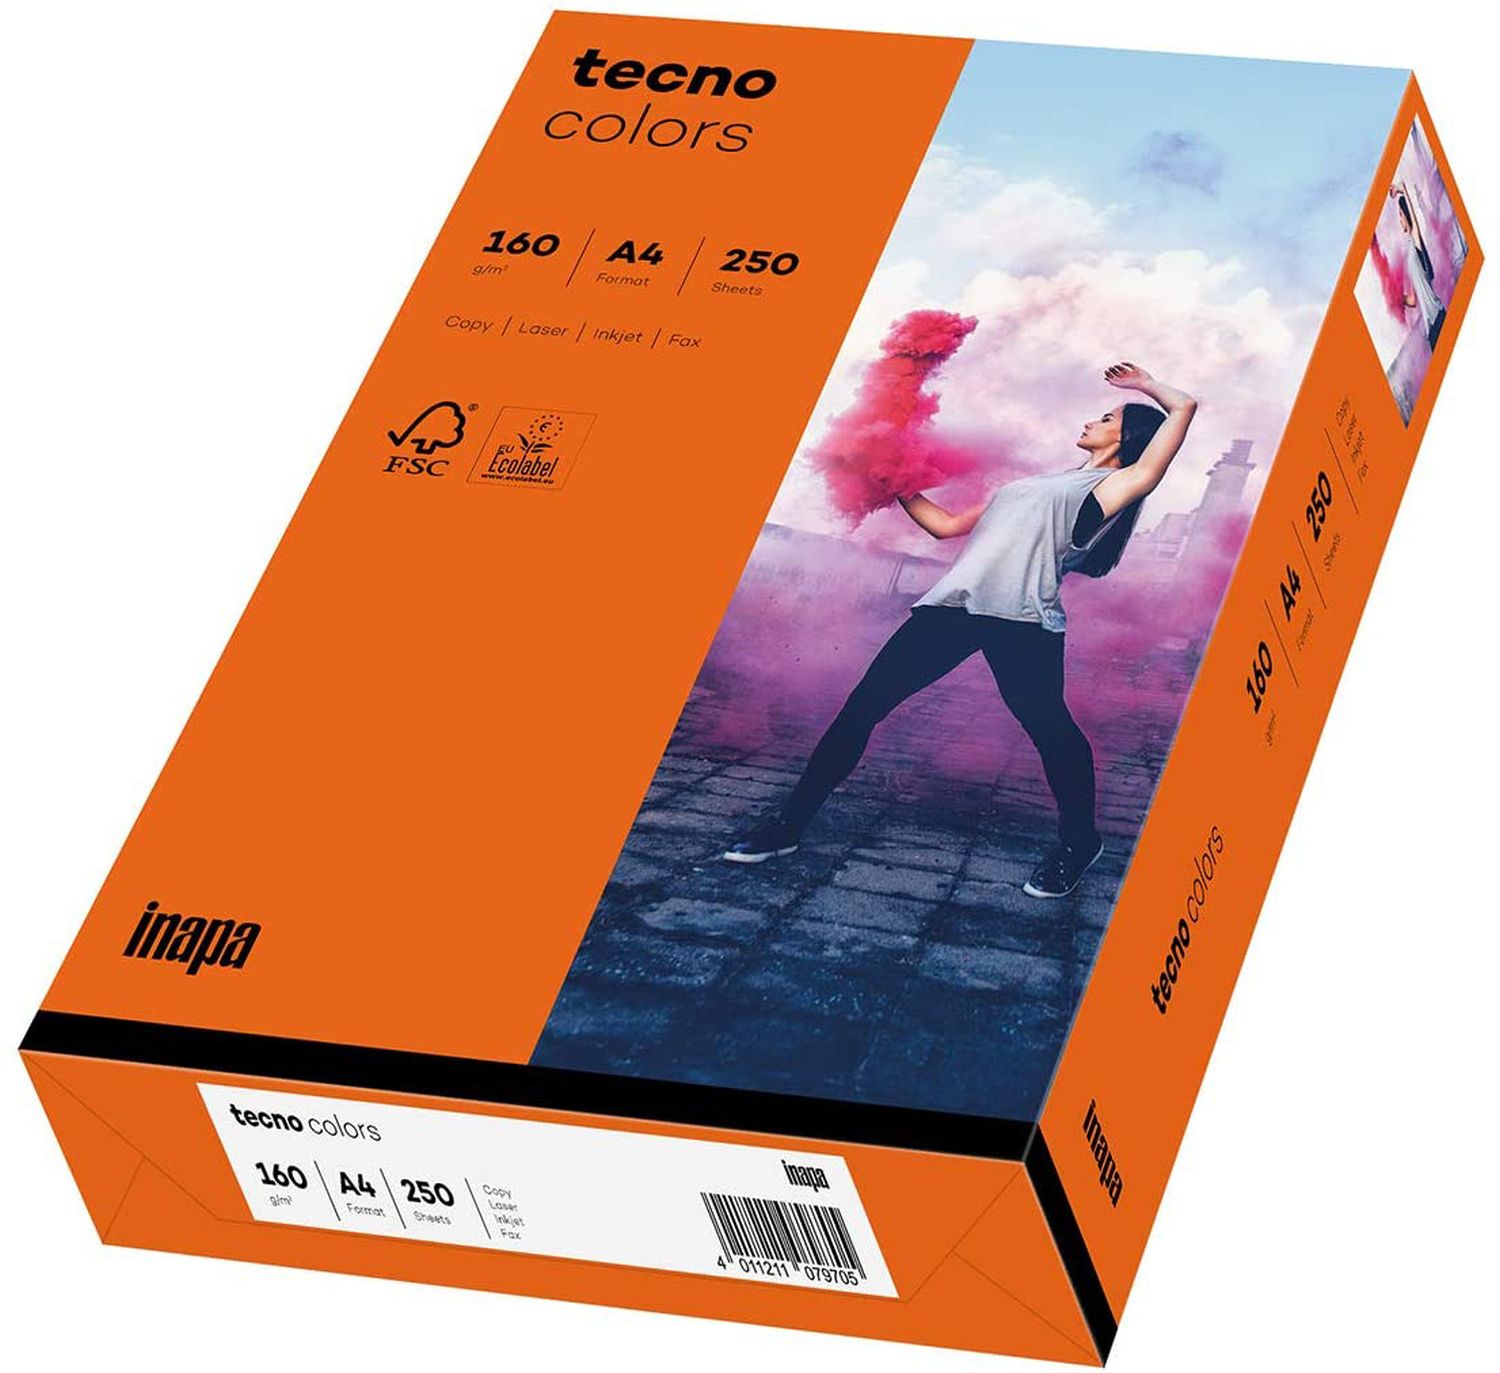 Kopierpapier Inapa tecno® colors 2100011384 DIN A4, 160 g/qm, pastellorange, pastell, 250 Blatt